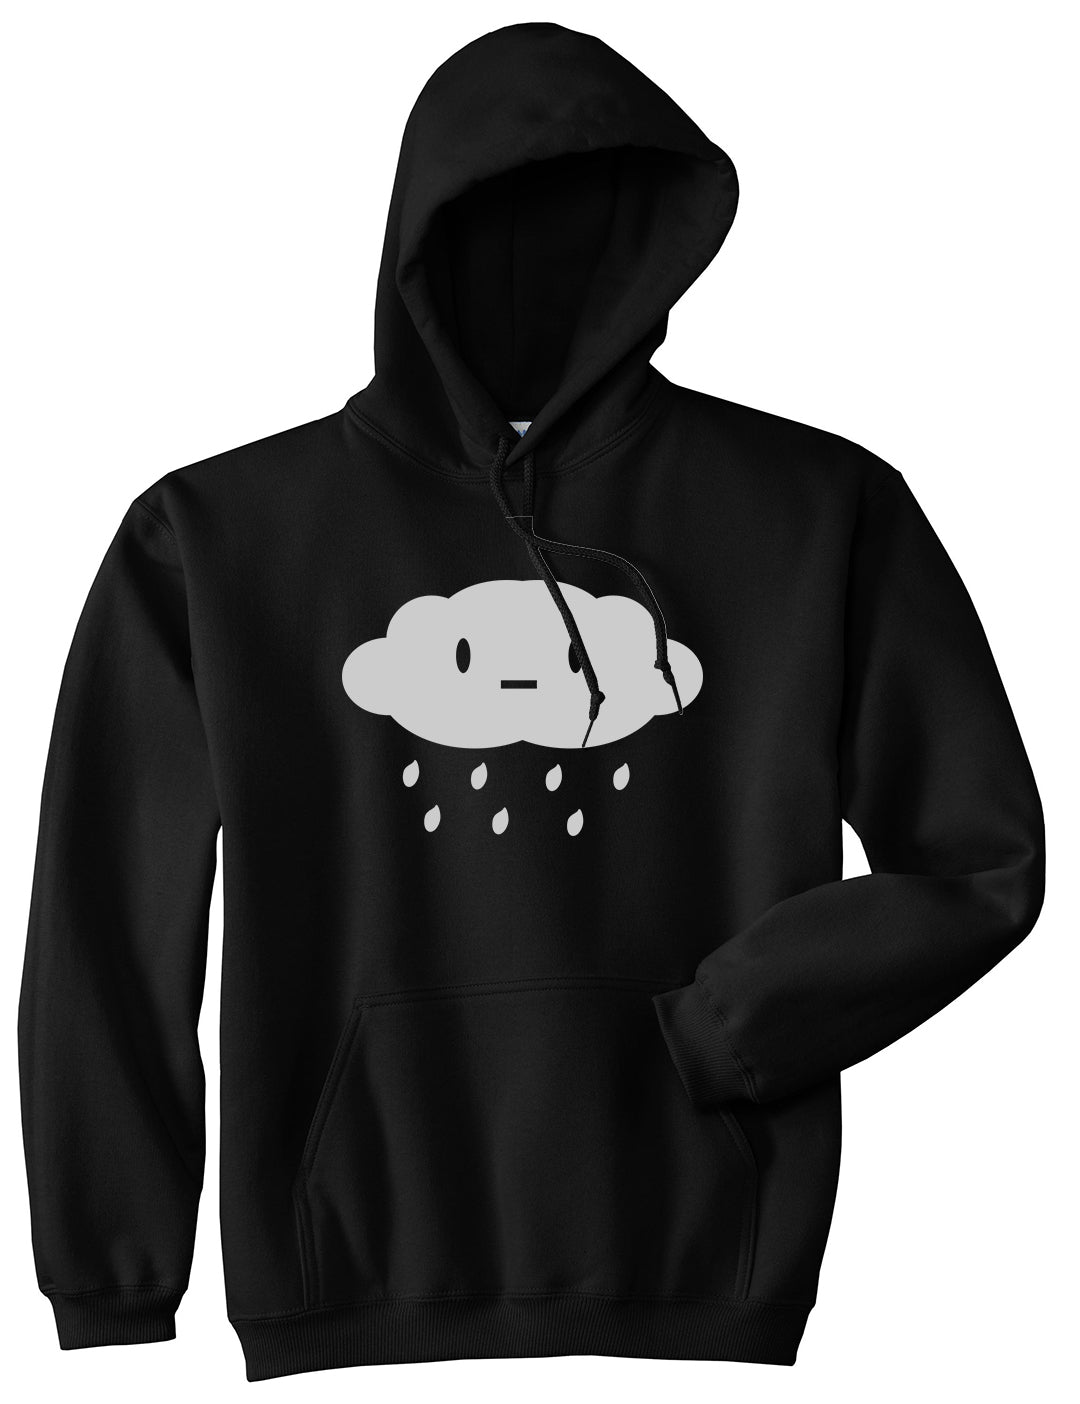 Cute Face Rain Cloud Black Pullover Hoodie by Kings Of NY